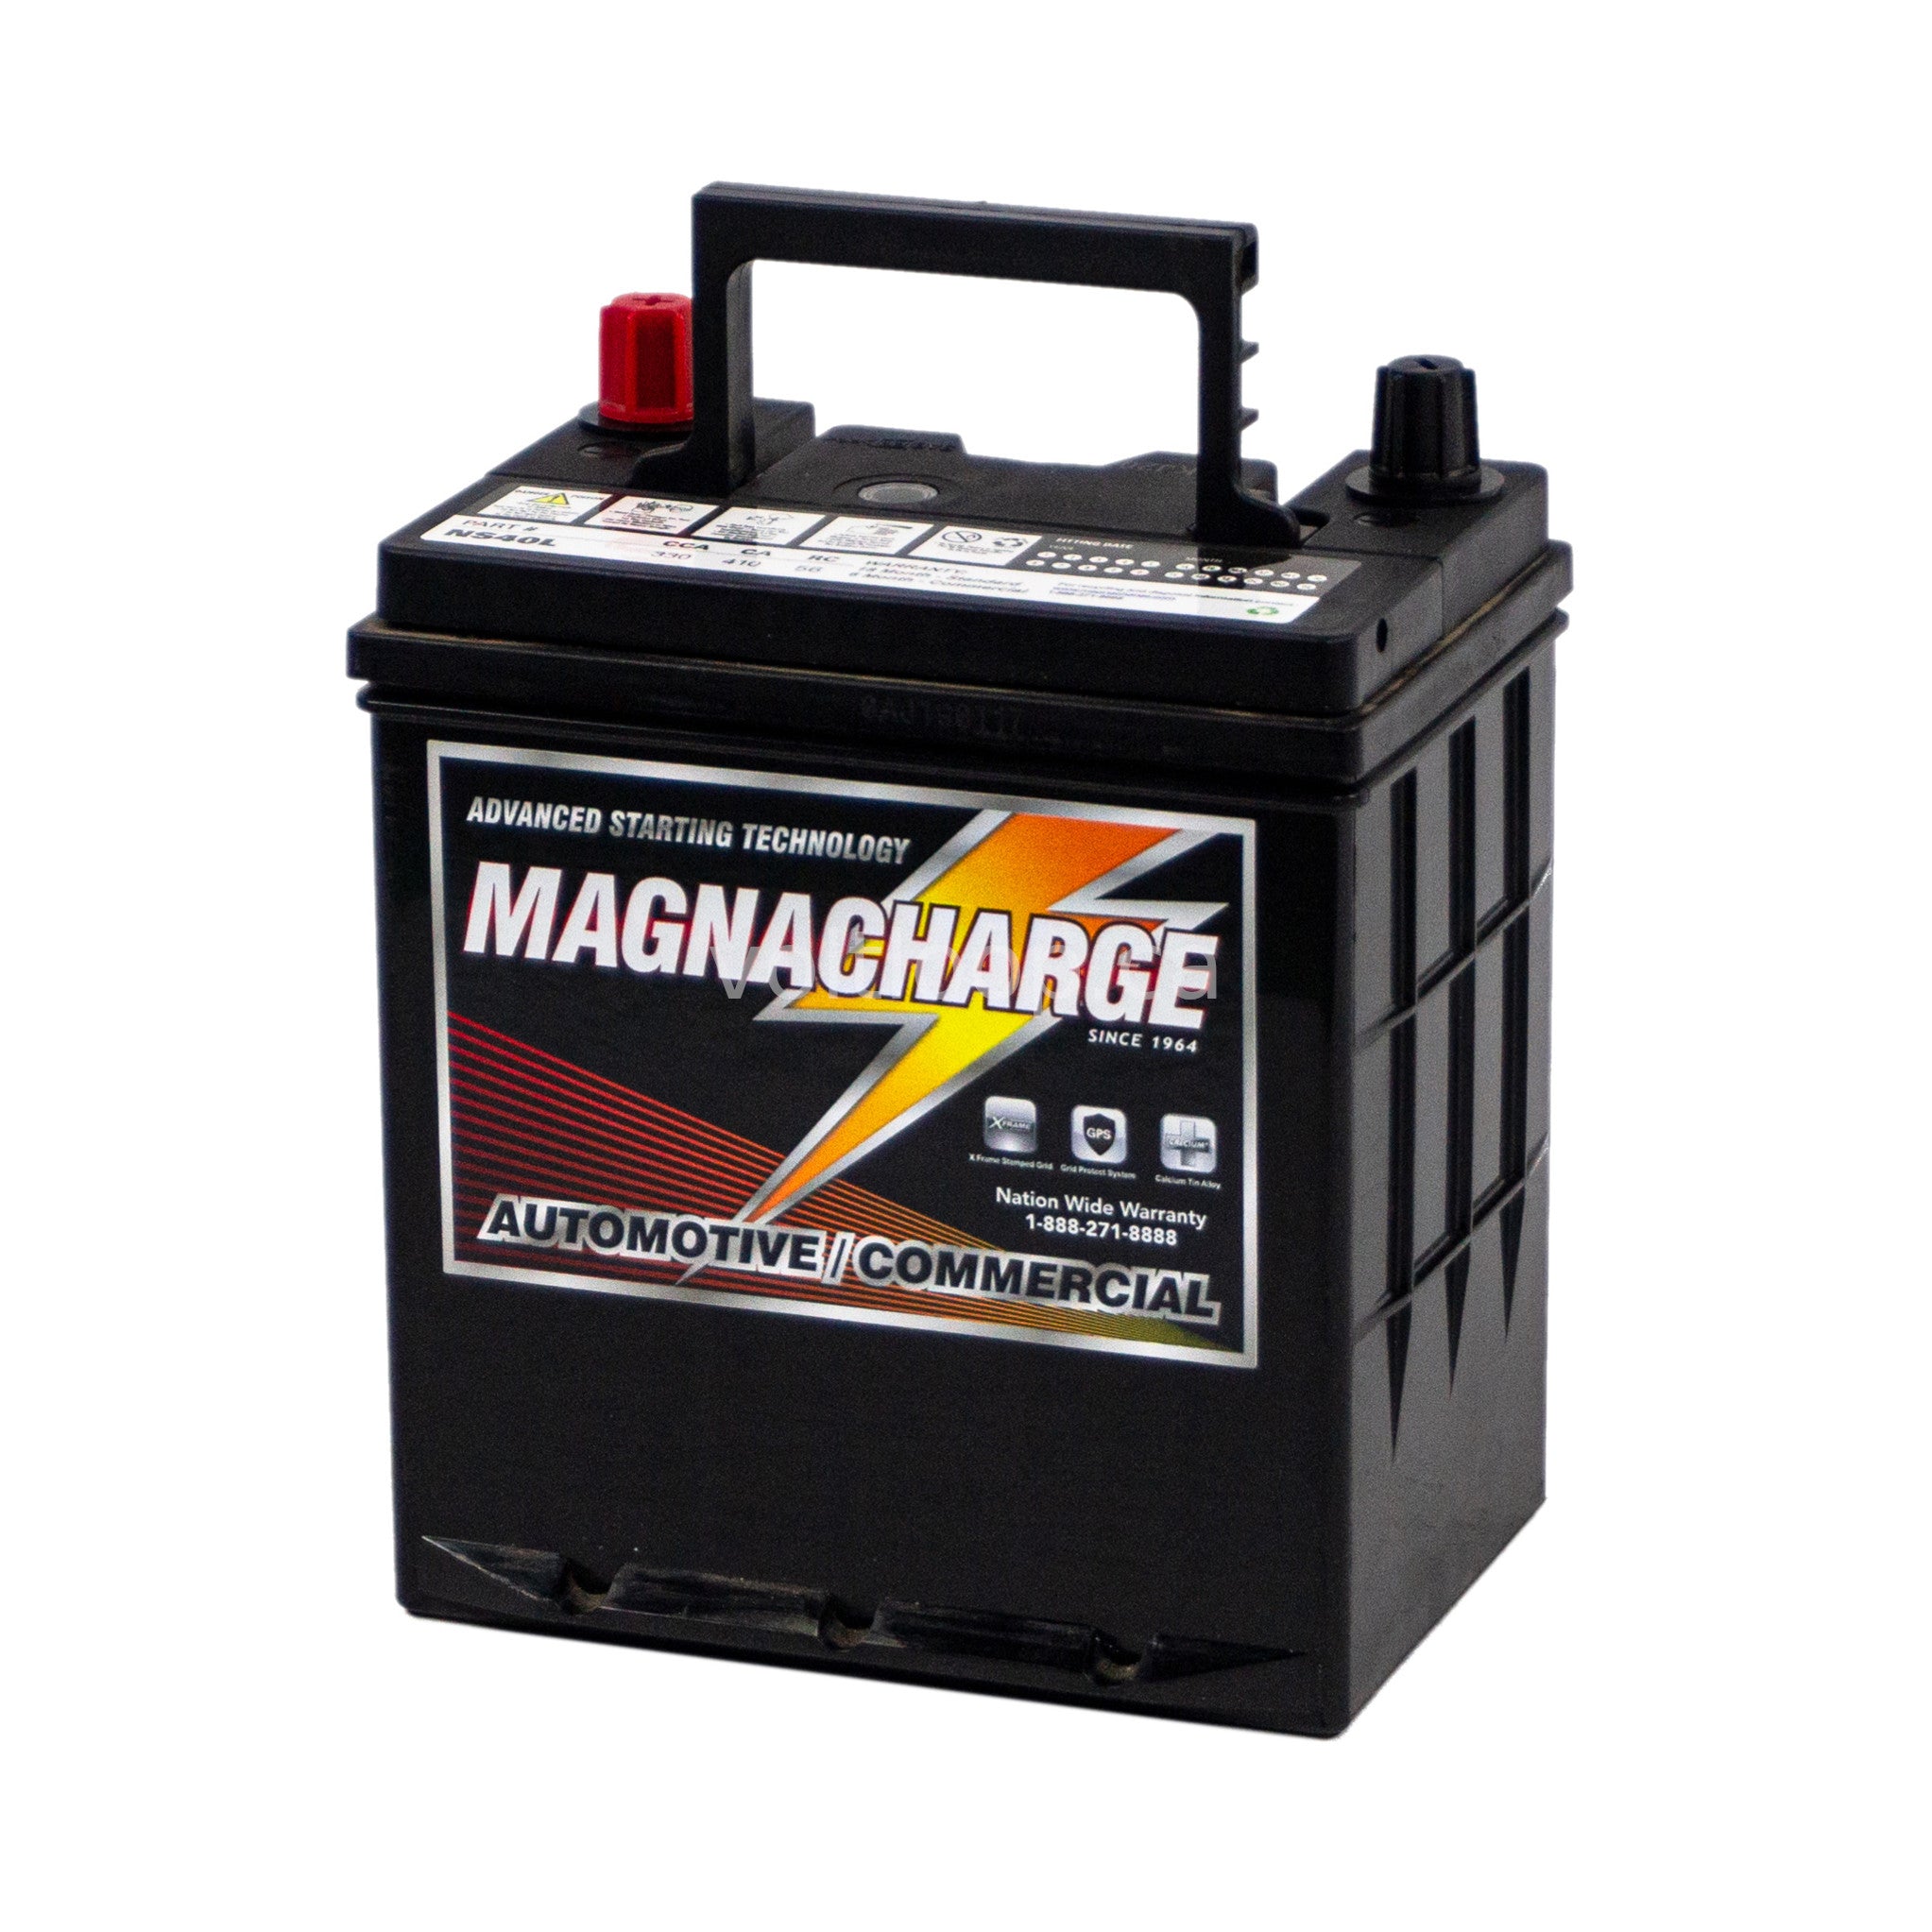 Magnacharge NS40L 12V Car Battery